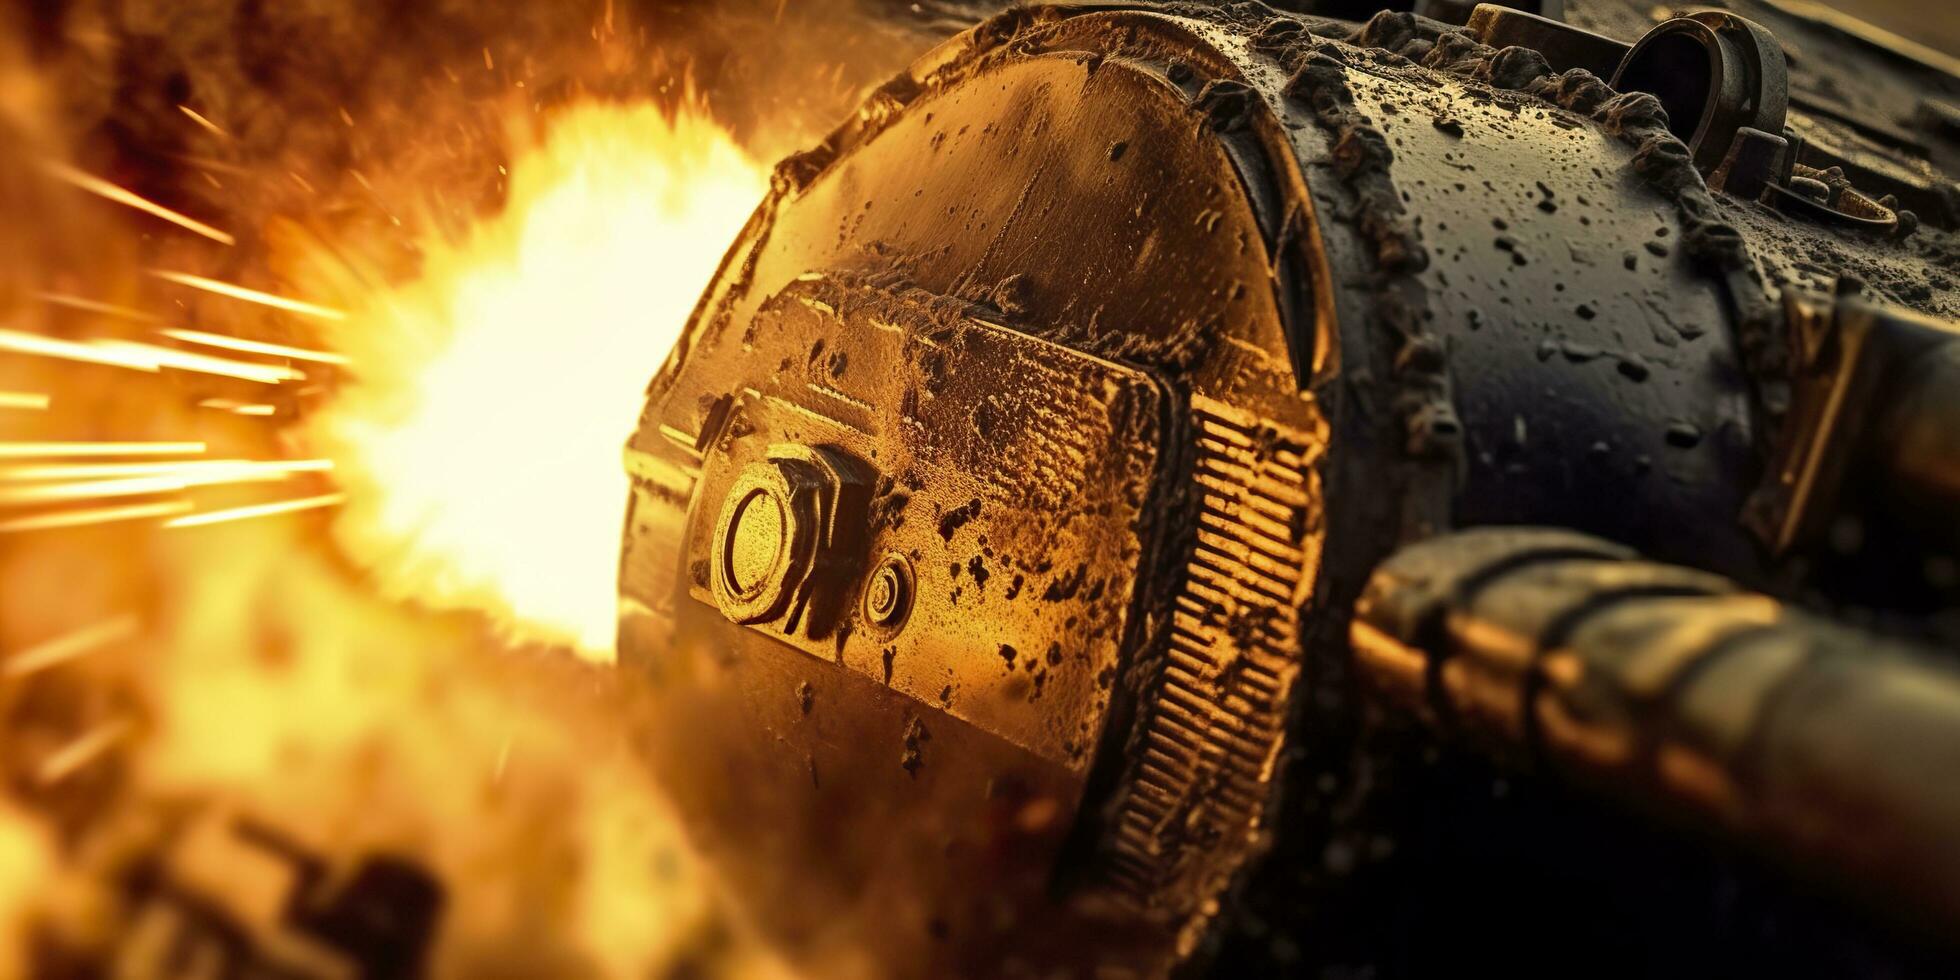 A Close Up Look at the Power and Destruction of a World War II Tank Firing Shell. AI Generative photo